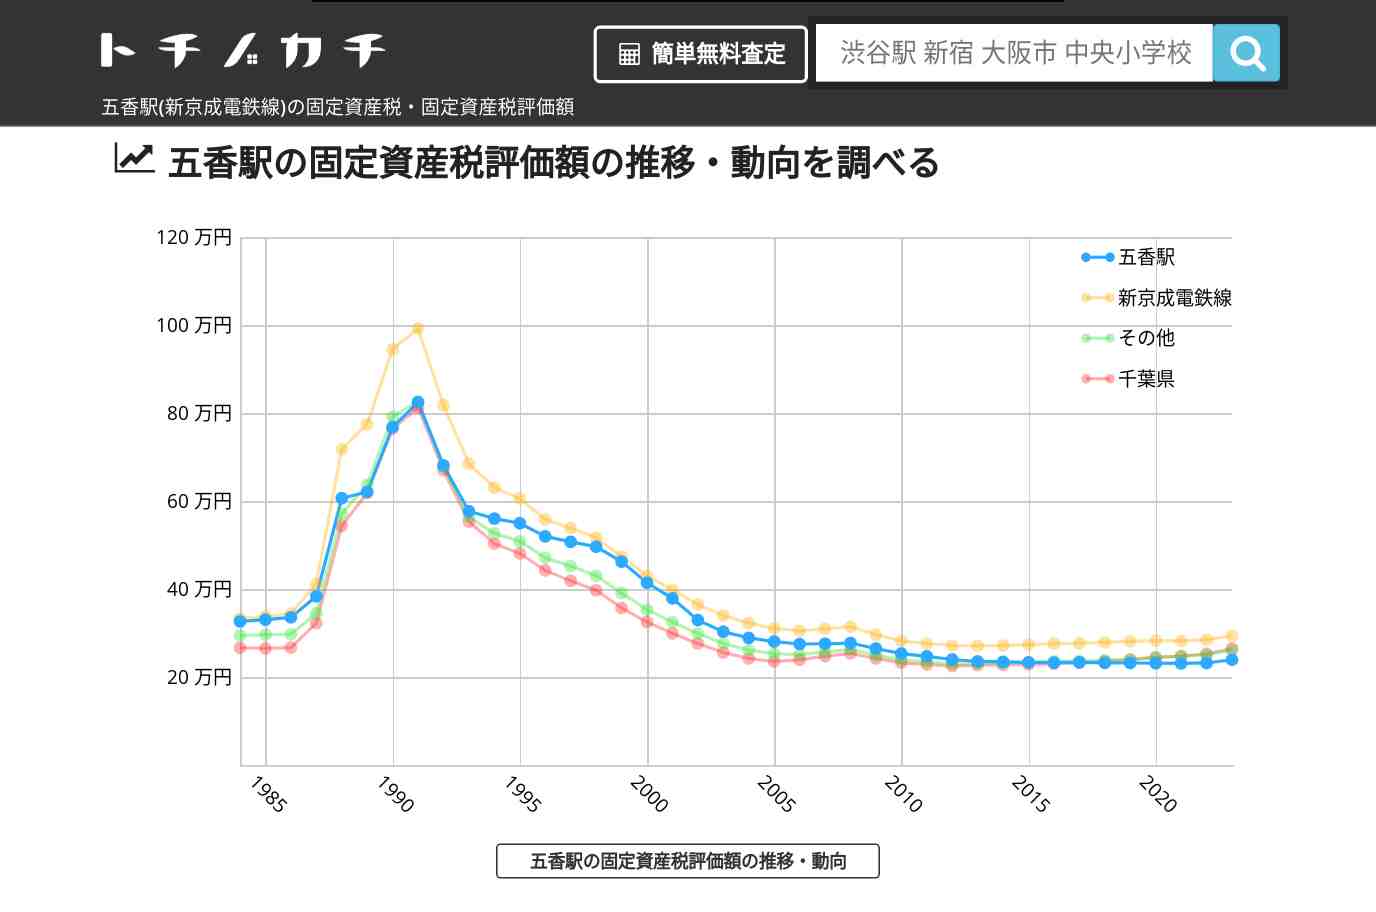 五香駅(新京成電鉄線)の固定資産税・固定資産税評価額 | トチノカチ